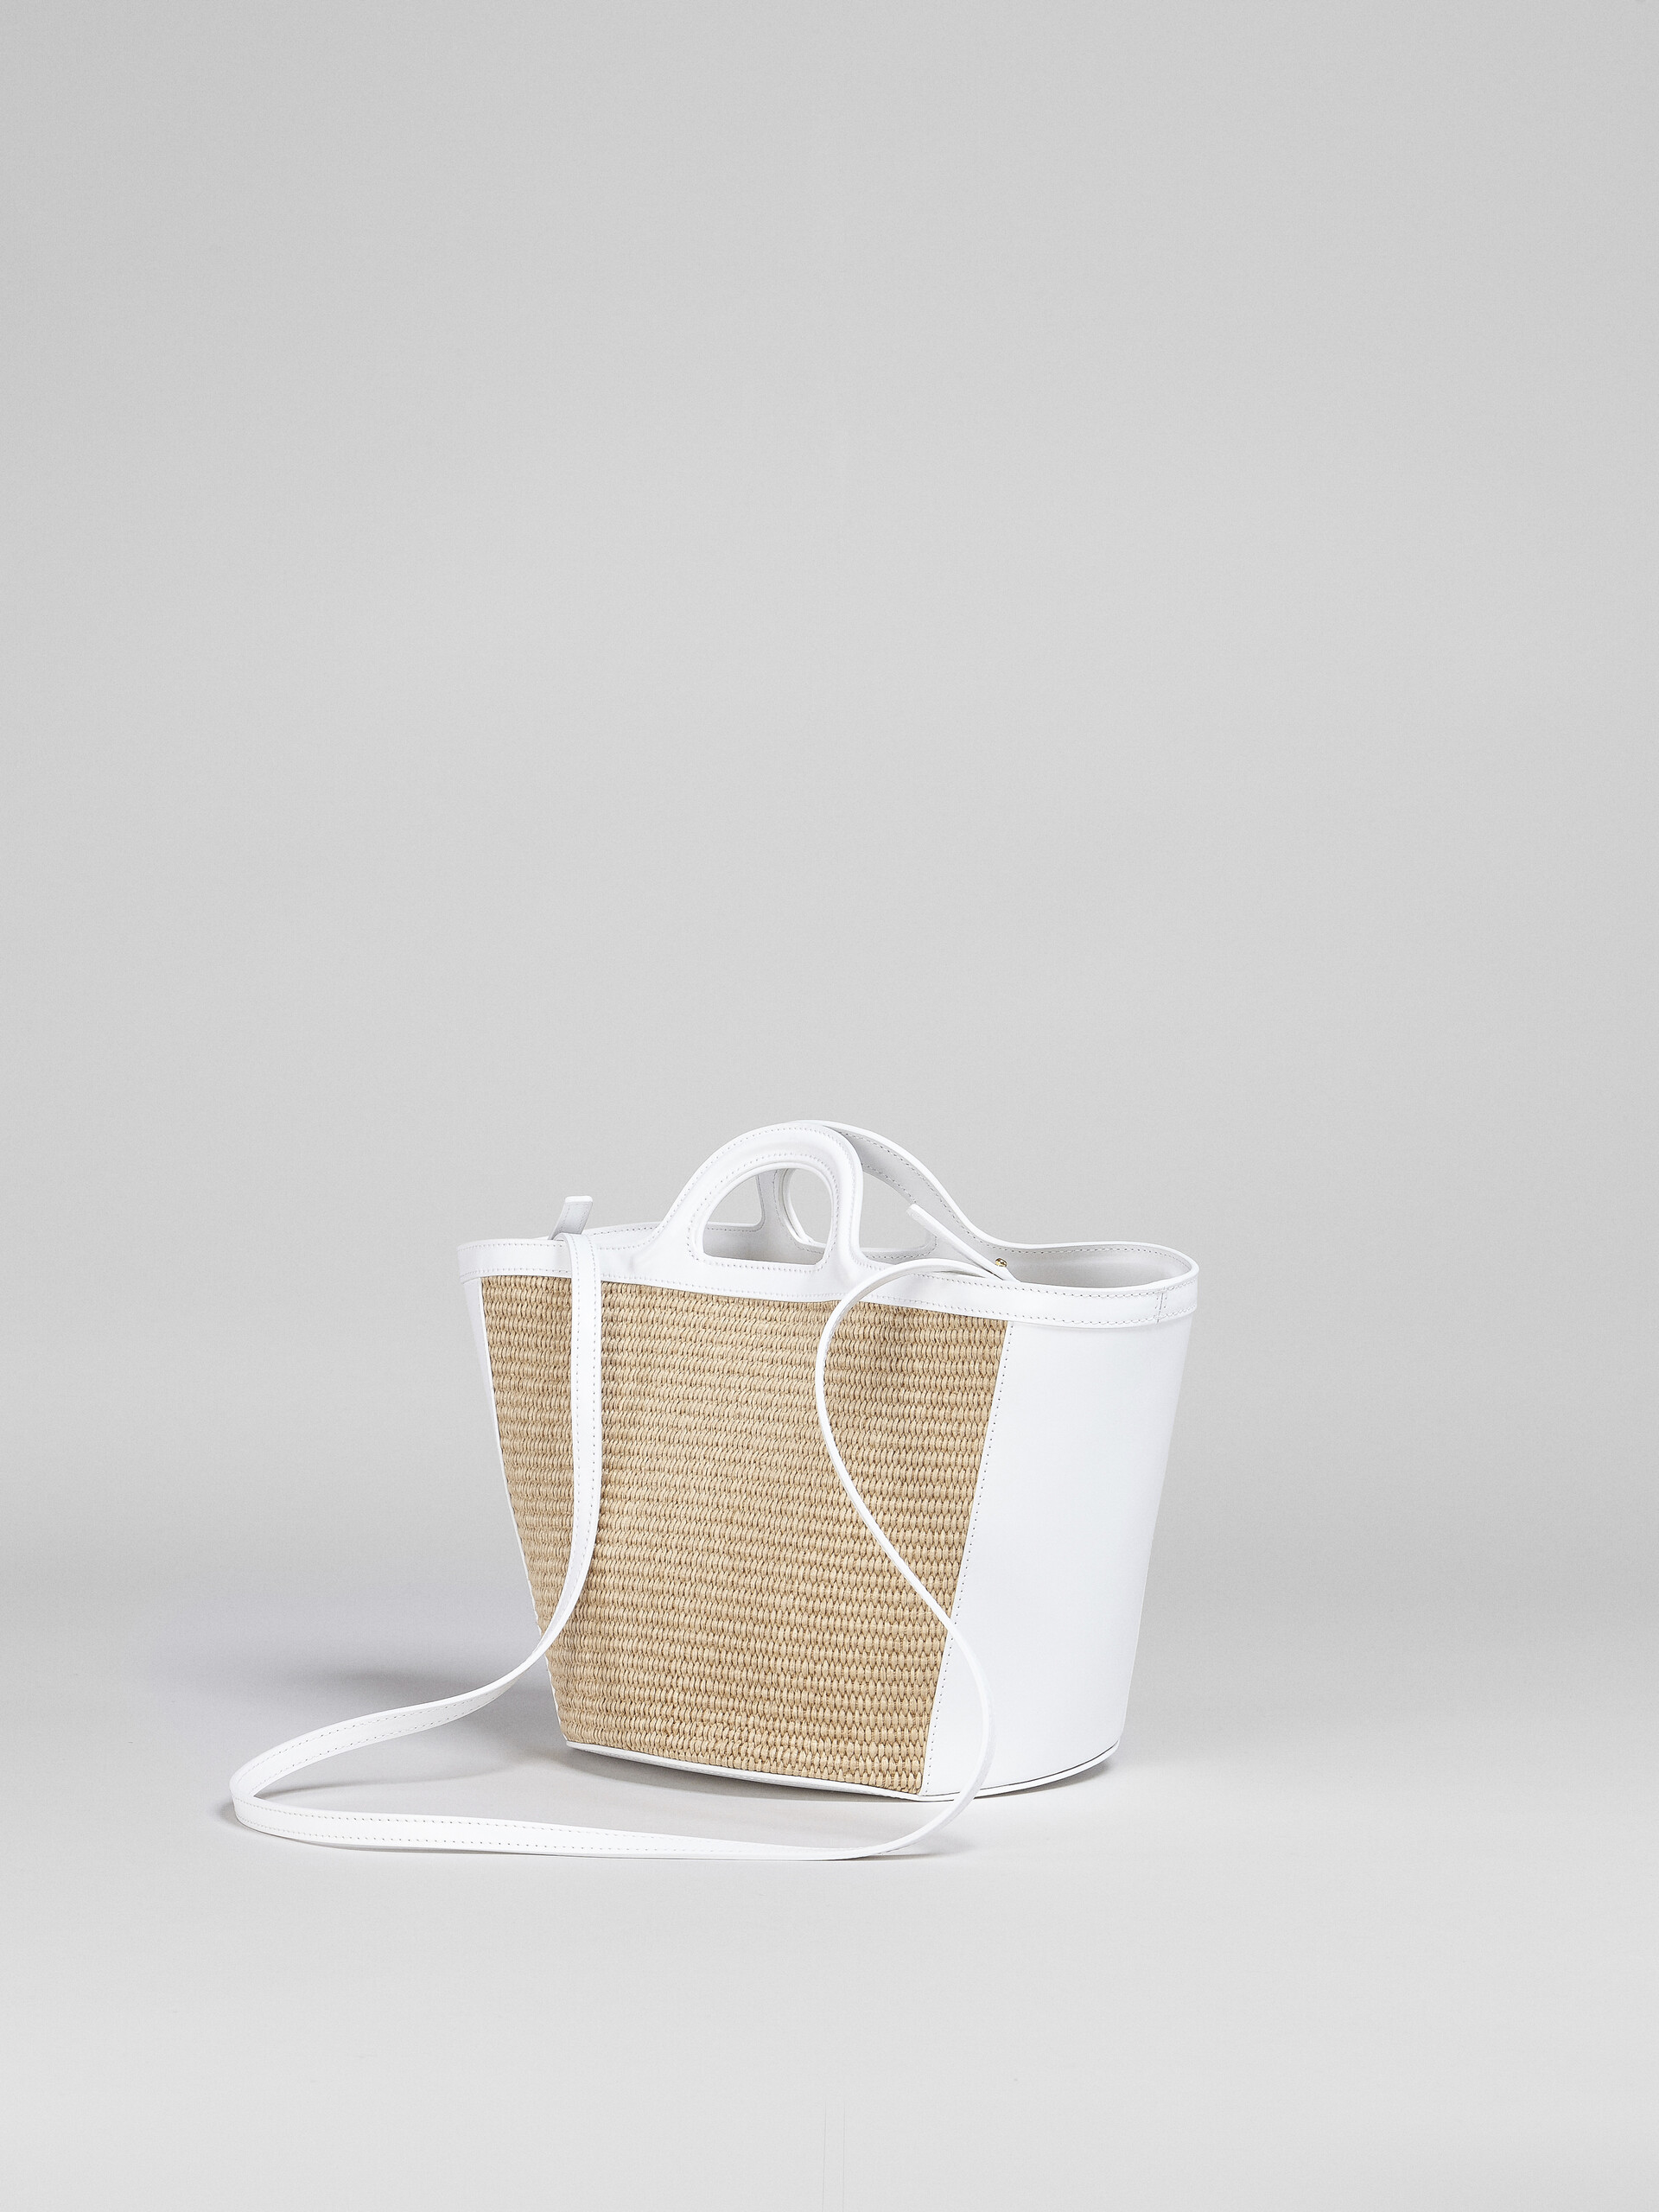 TROPICALIA small bag in white leather and raffia - Handbags - Image 3